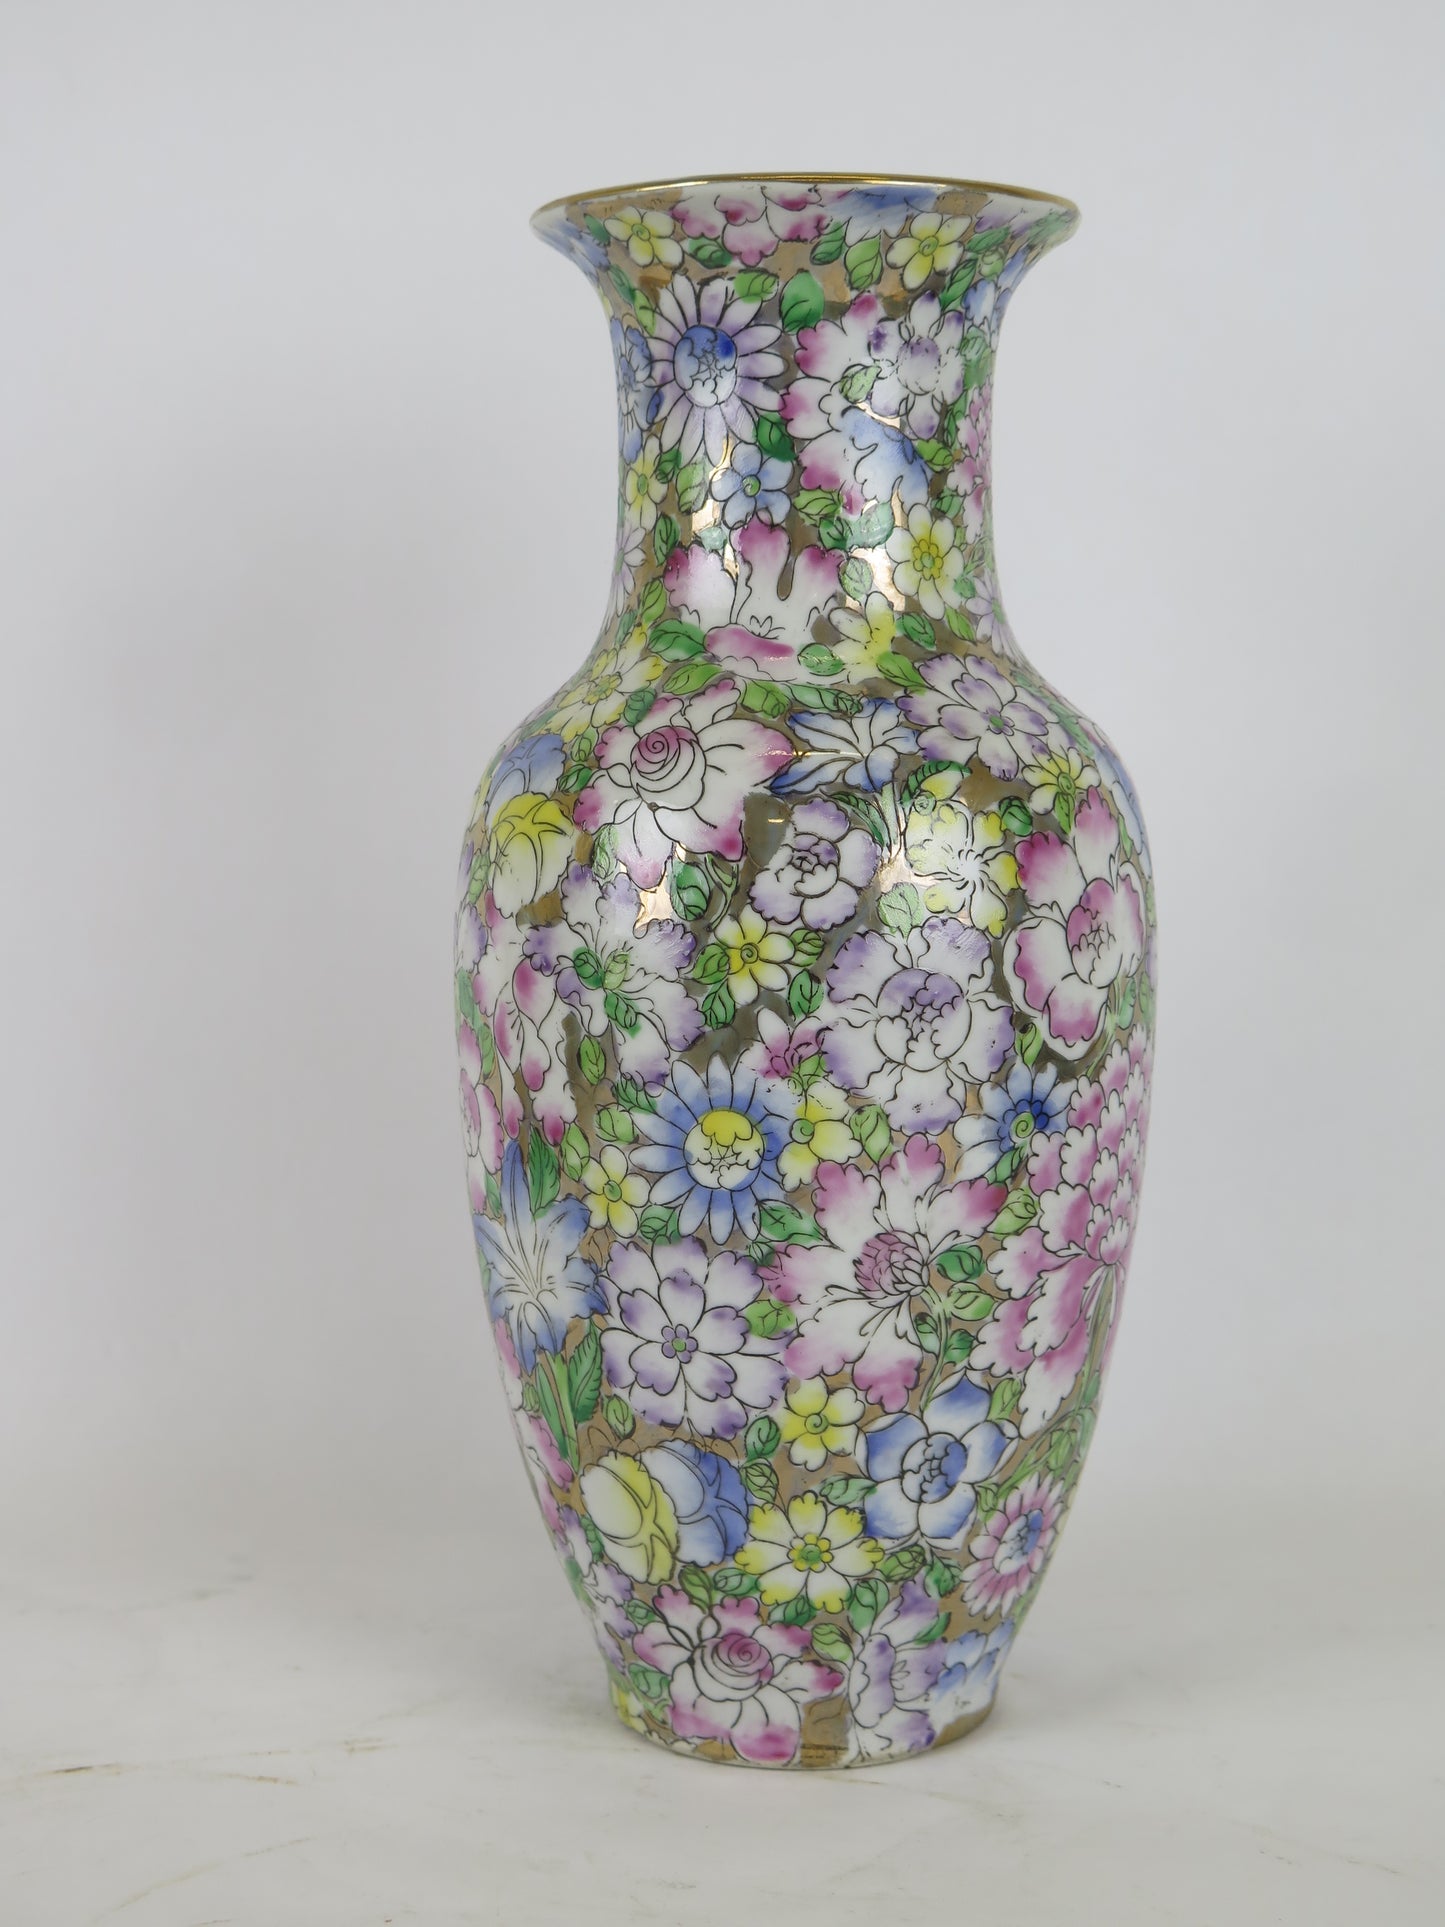 Hand painted porcelain flower vase China Asia vintage home decoration CM4 b